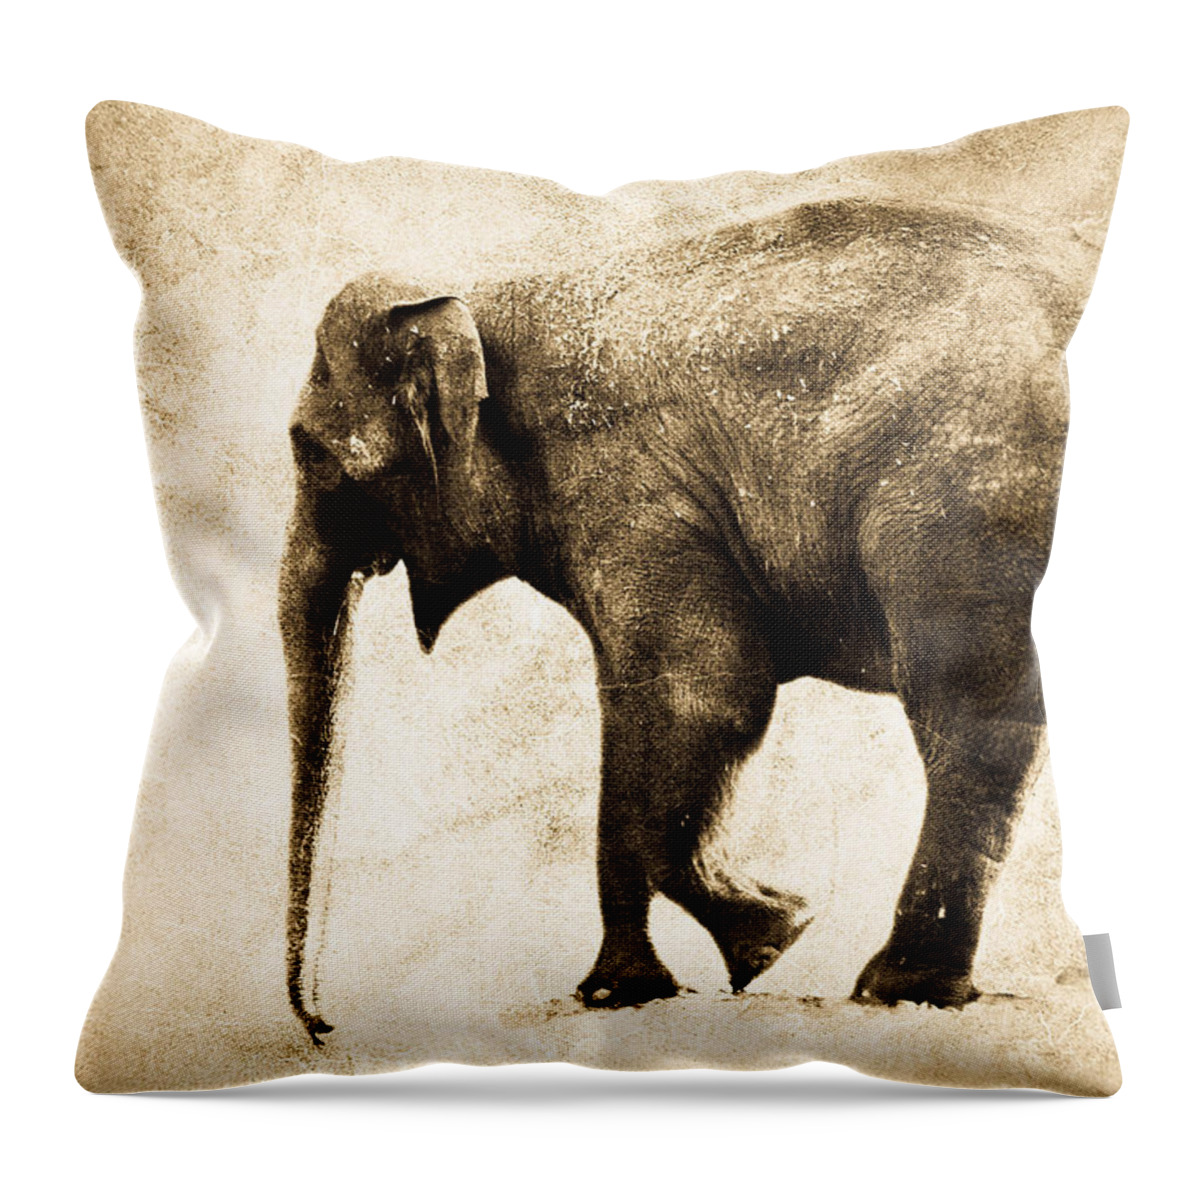 Elephant Throw Pillow featuring the photograph Elephant Walk by Athena Mckinzie